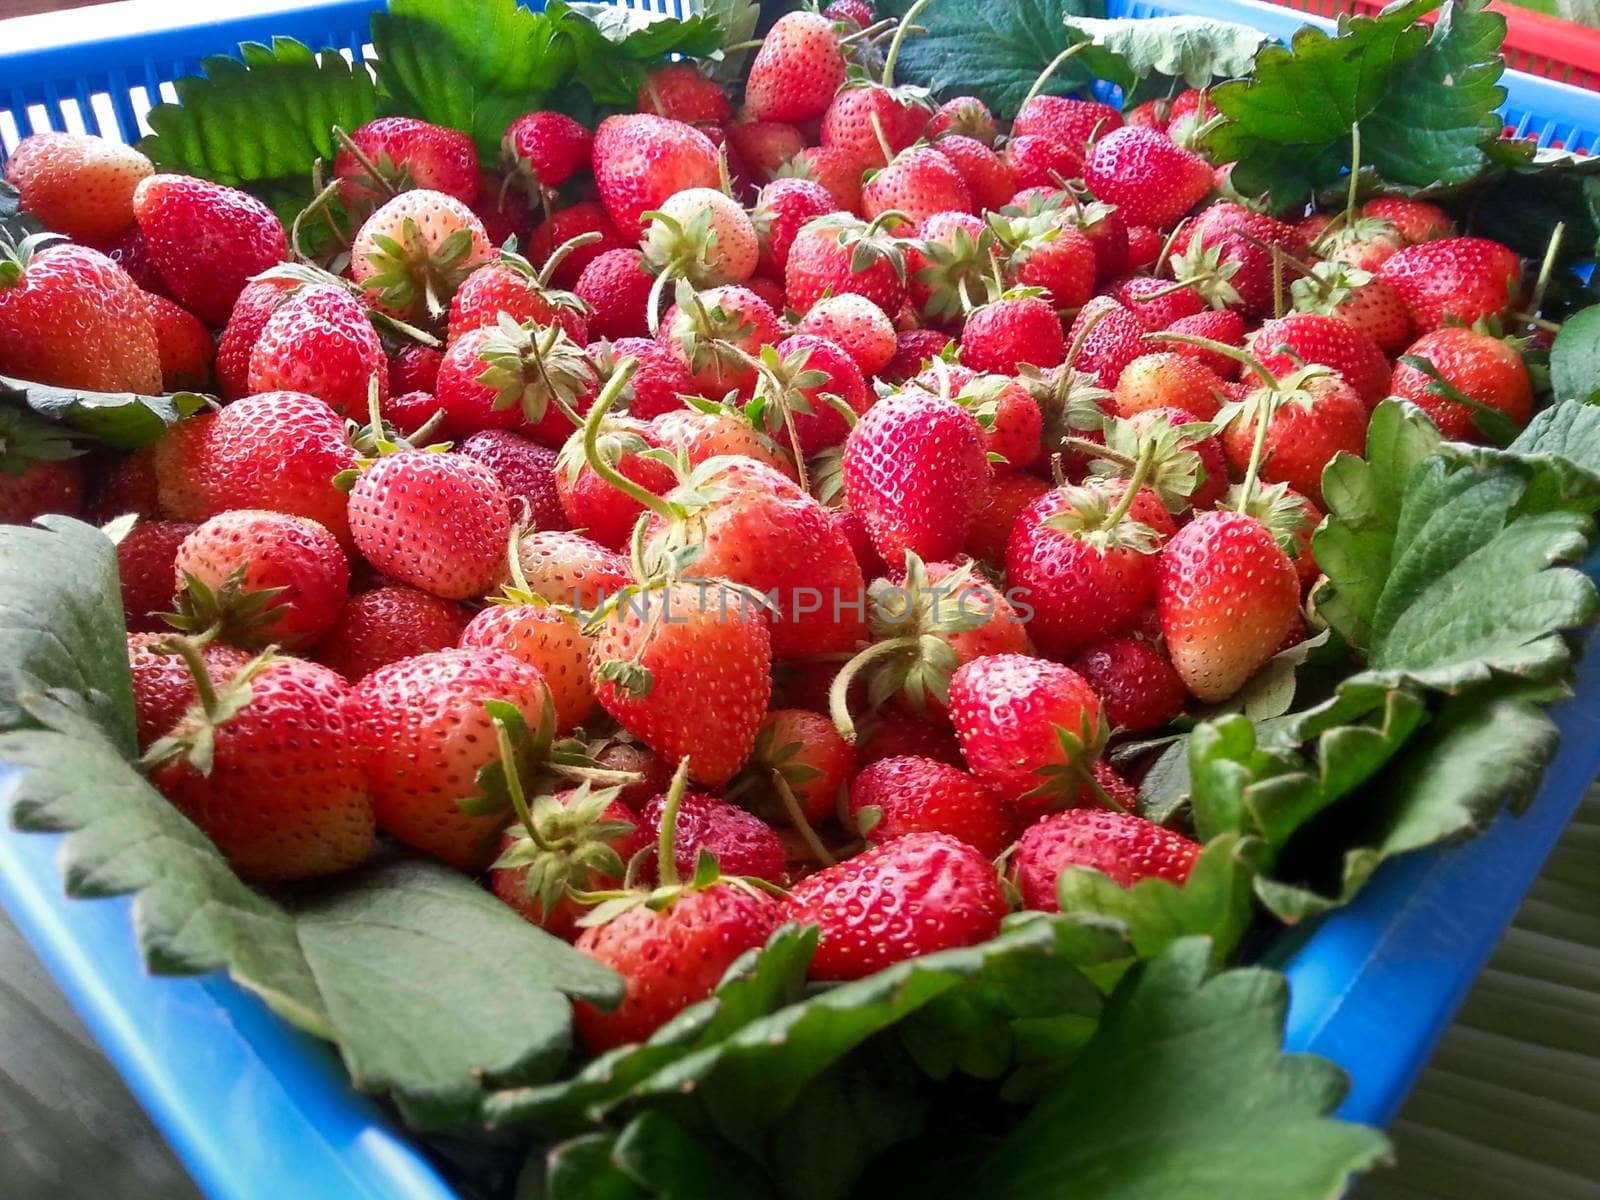 Strawberries in a basket, high in vitamin C.